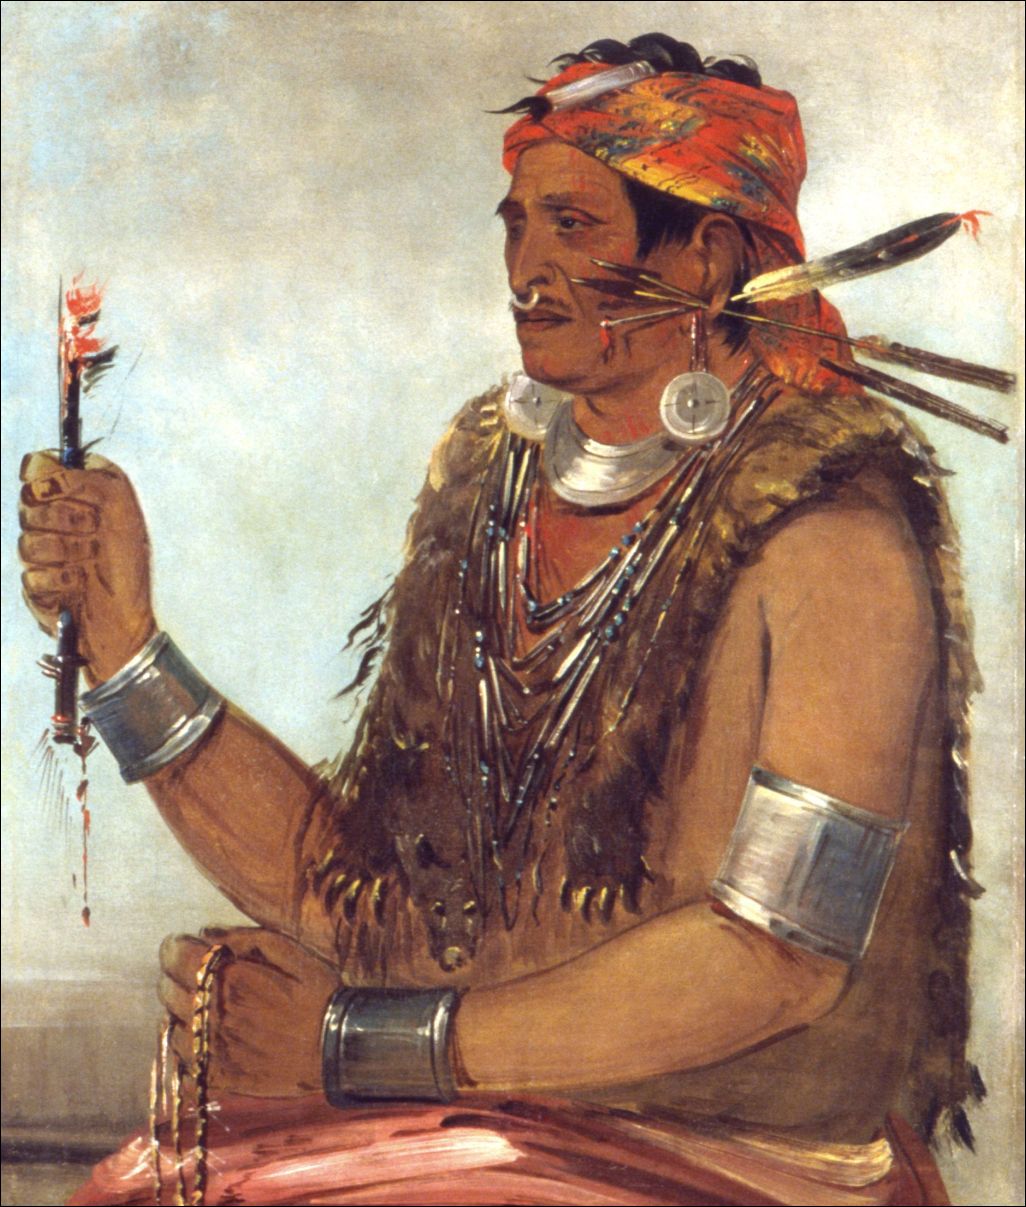 Tenskwatawa, brother of Tecumseh known as the Prophet, 